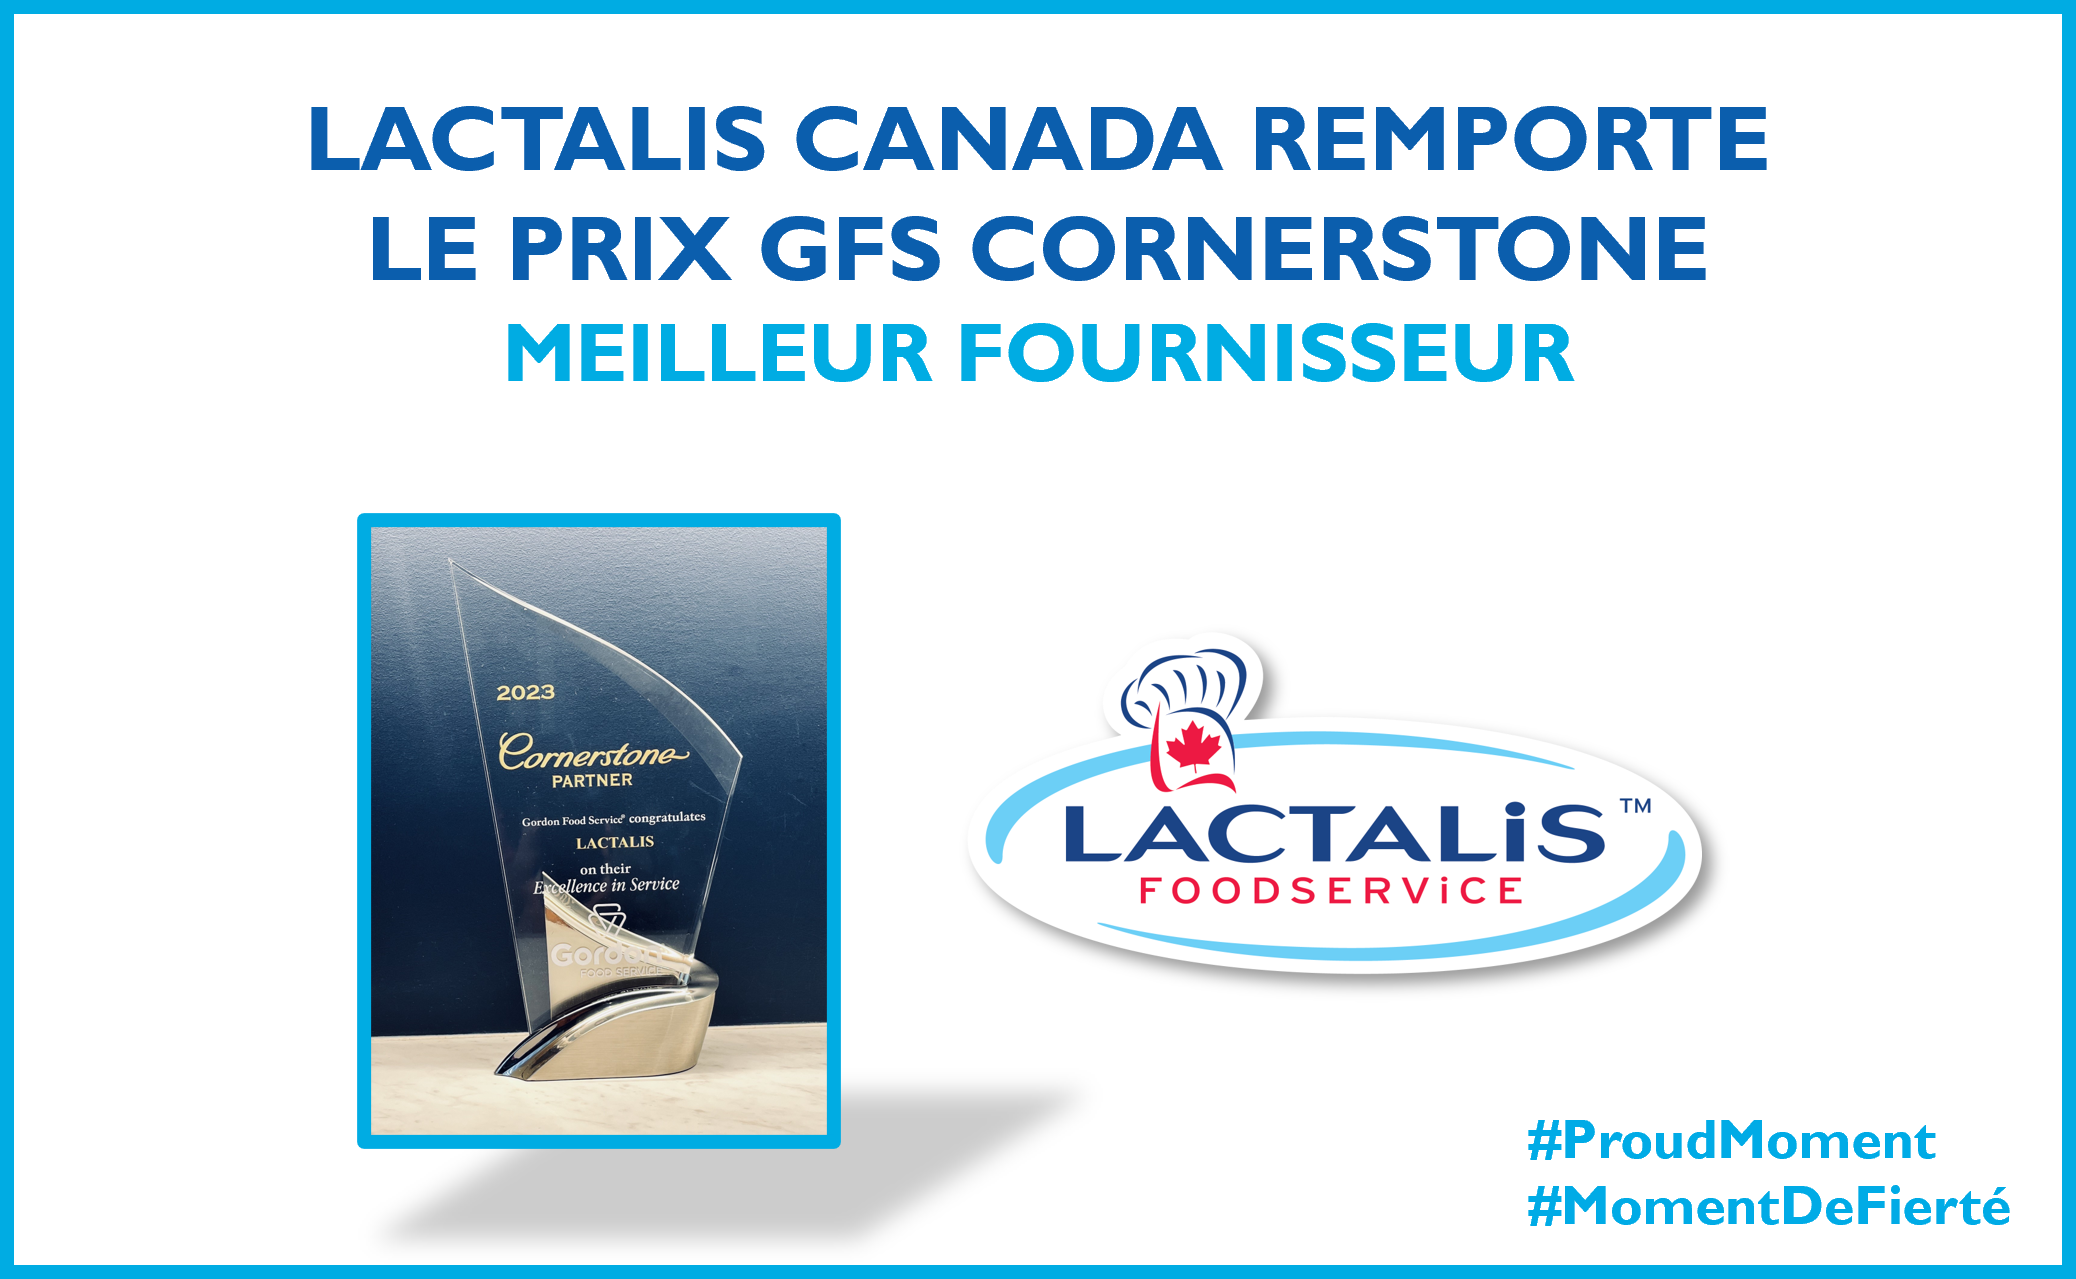 Lactalis Canada Wins  GFS Cornerstone Award